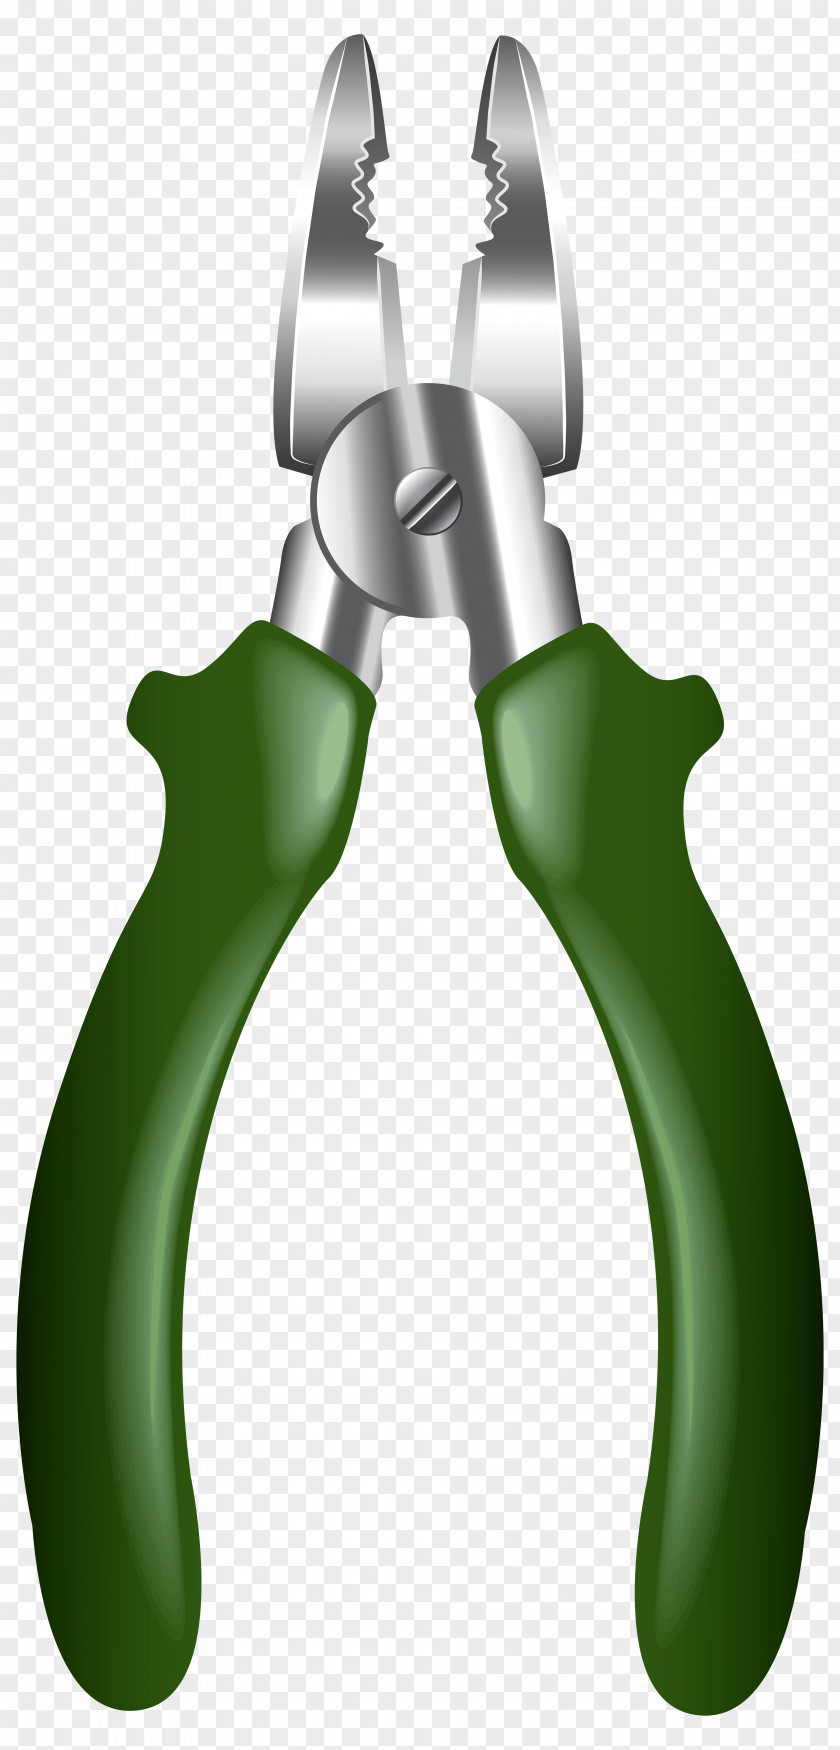 Plier Hand Tool Pliers Clip Art PNG